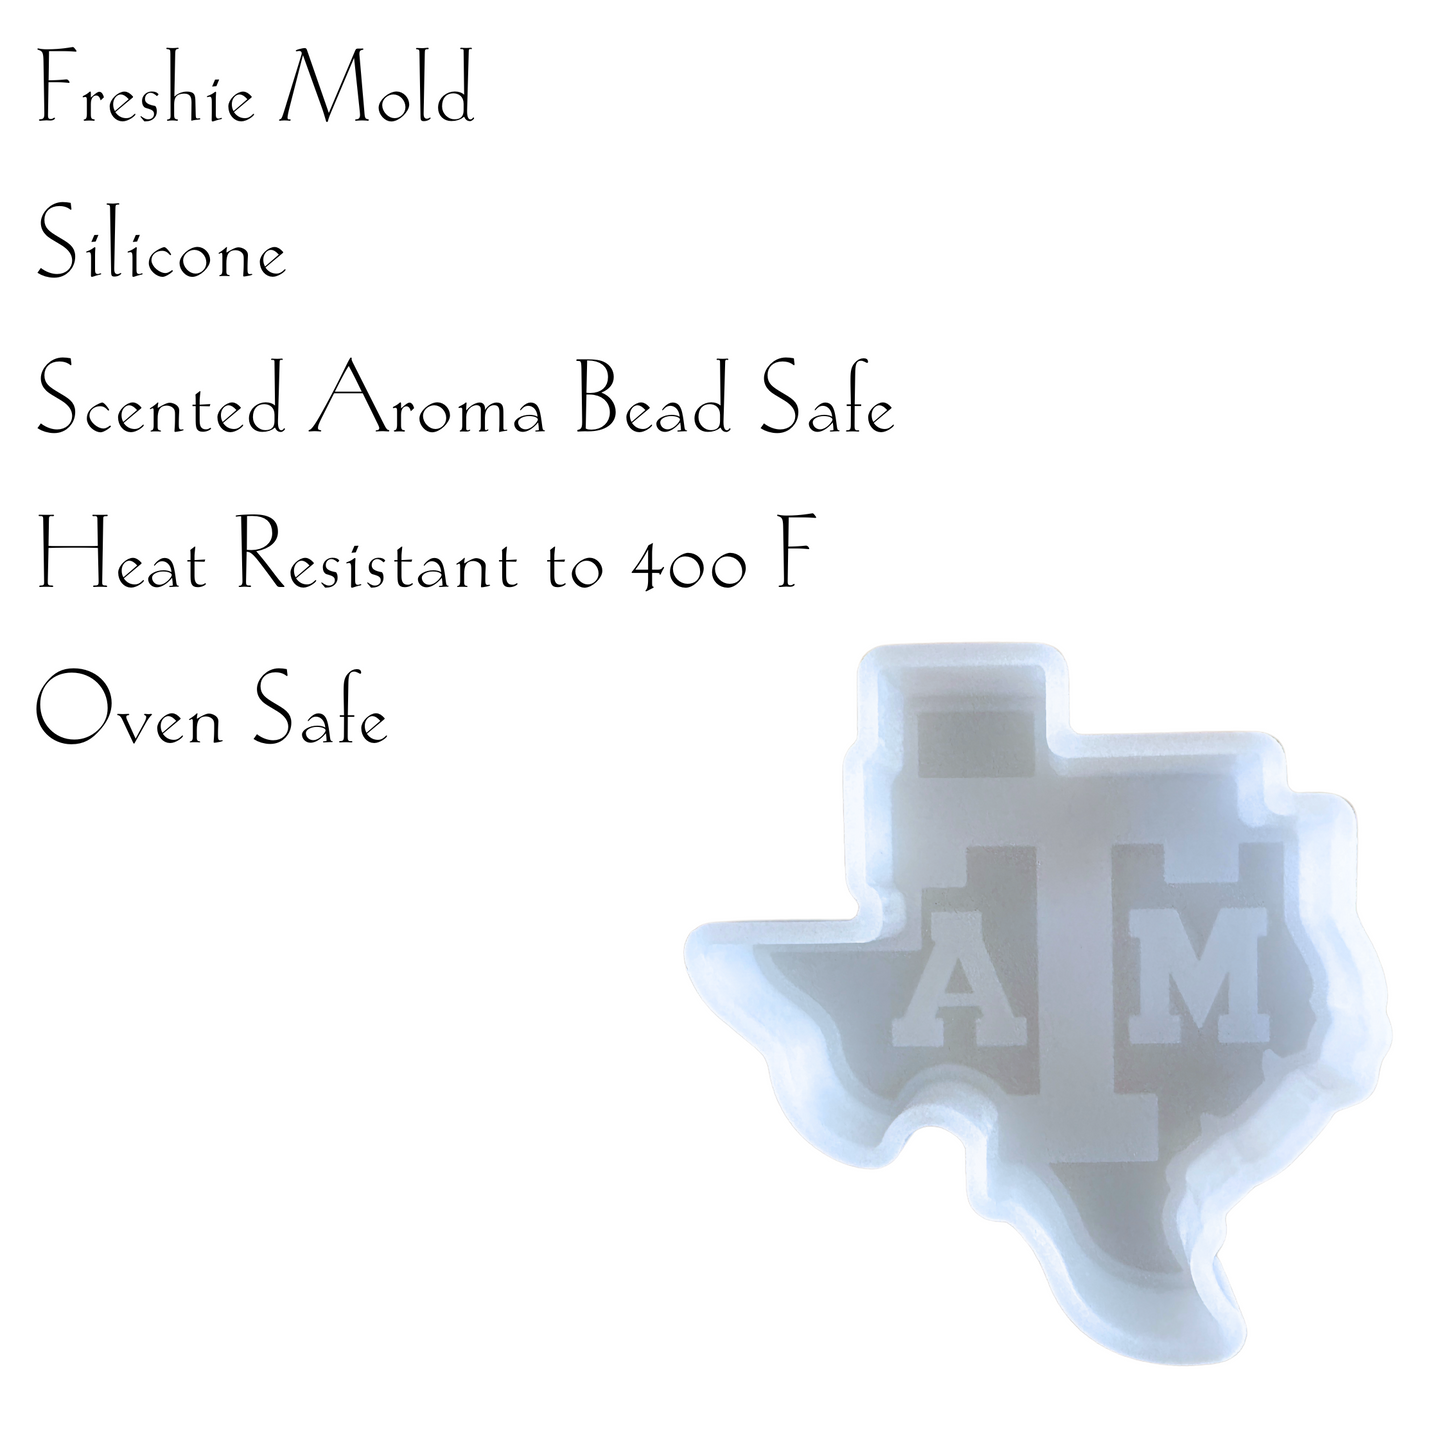 Texas College Football Freshie Silicone Mold 2 x 4 x 0.8”